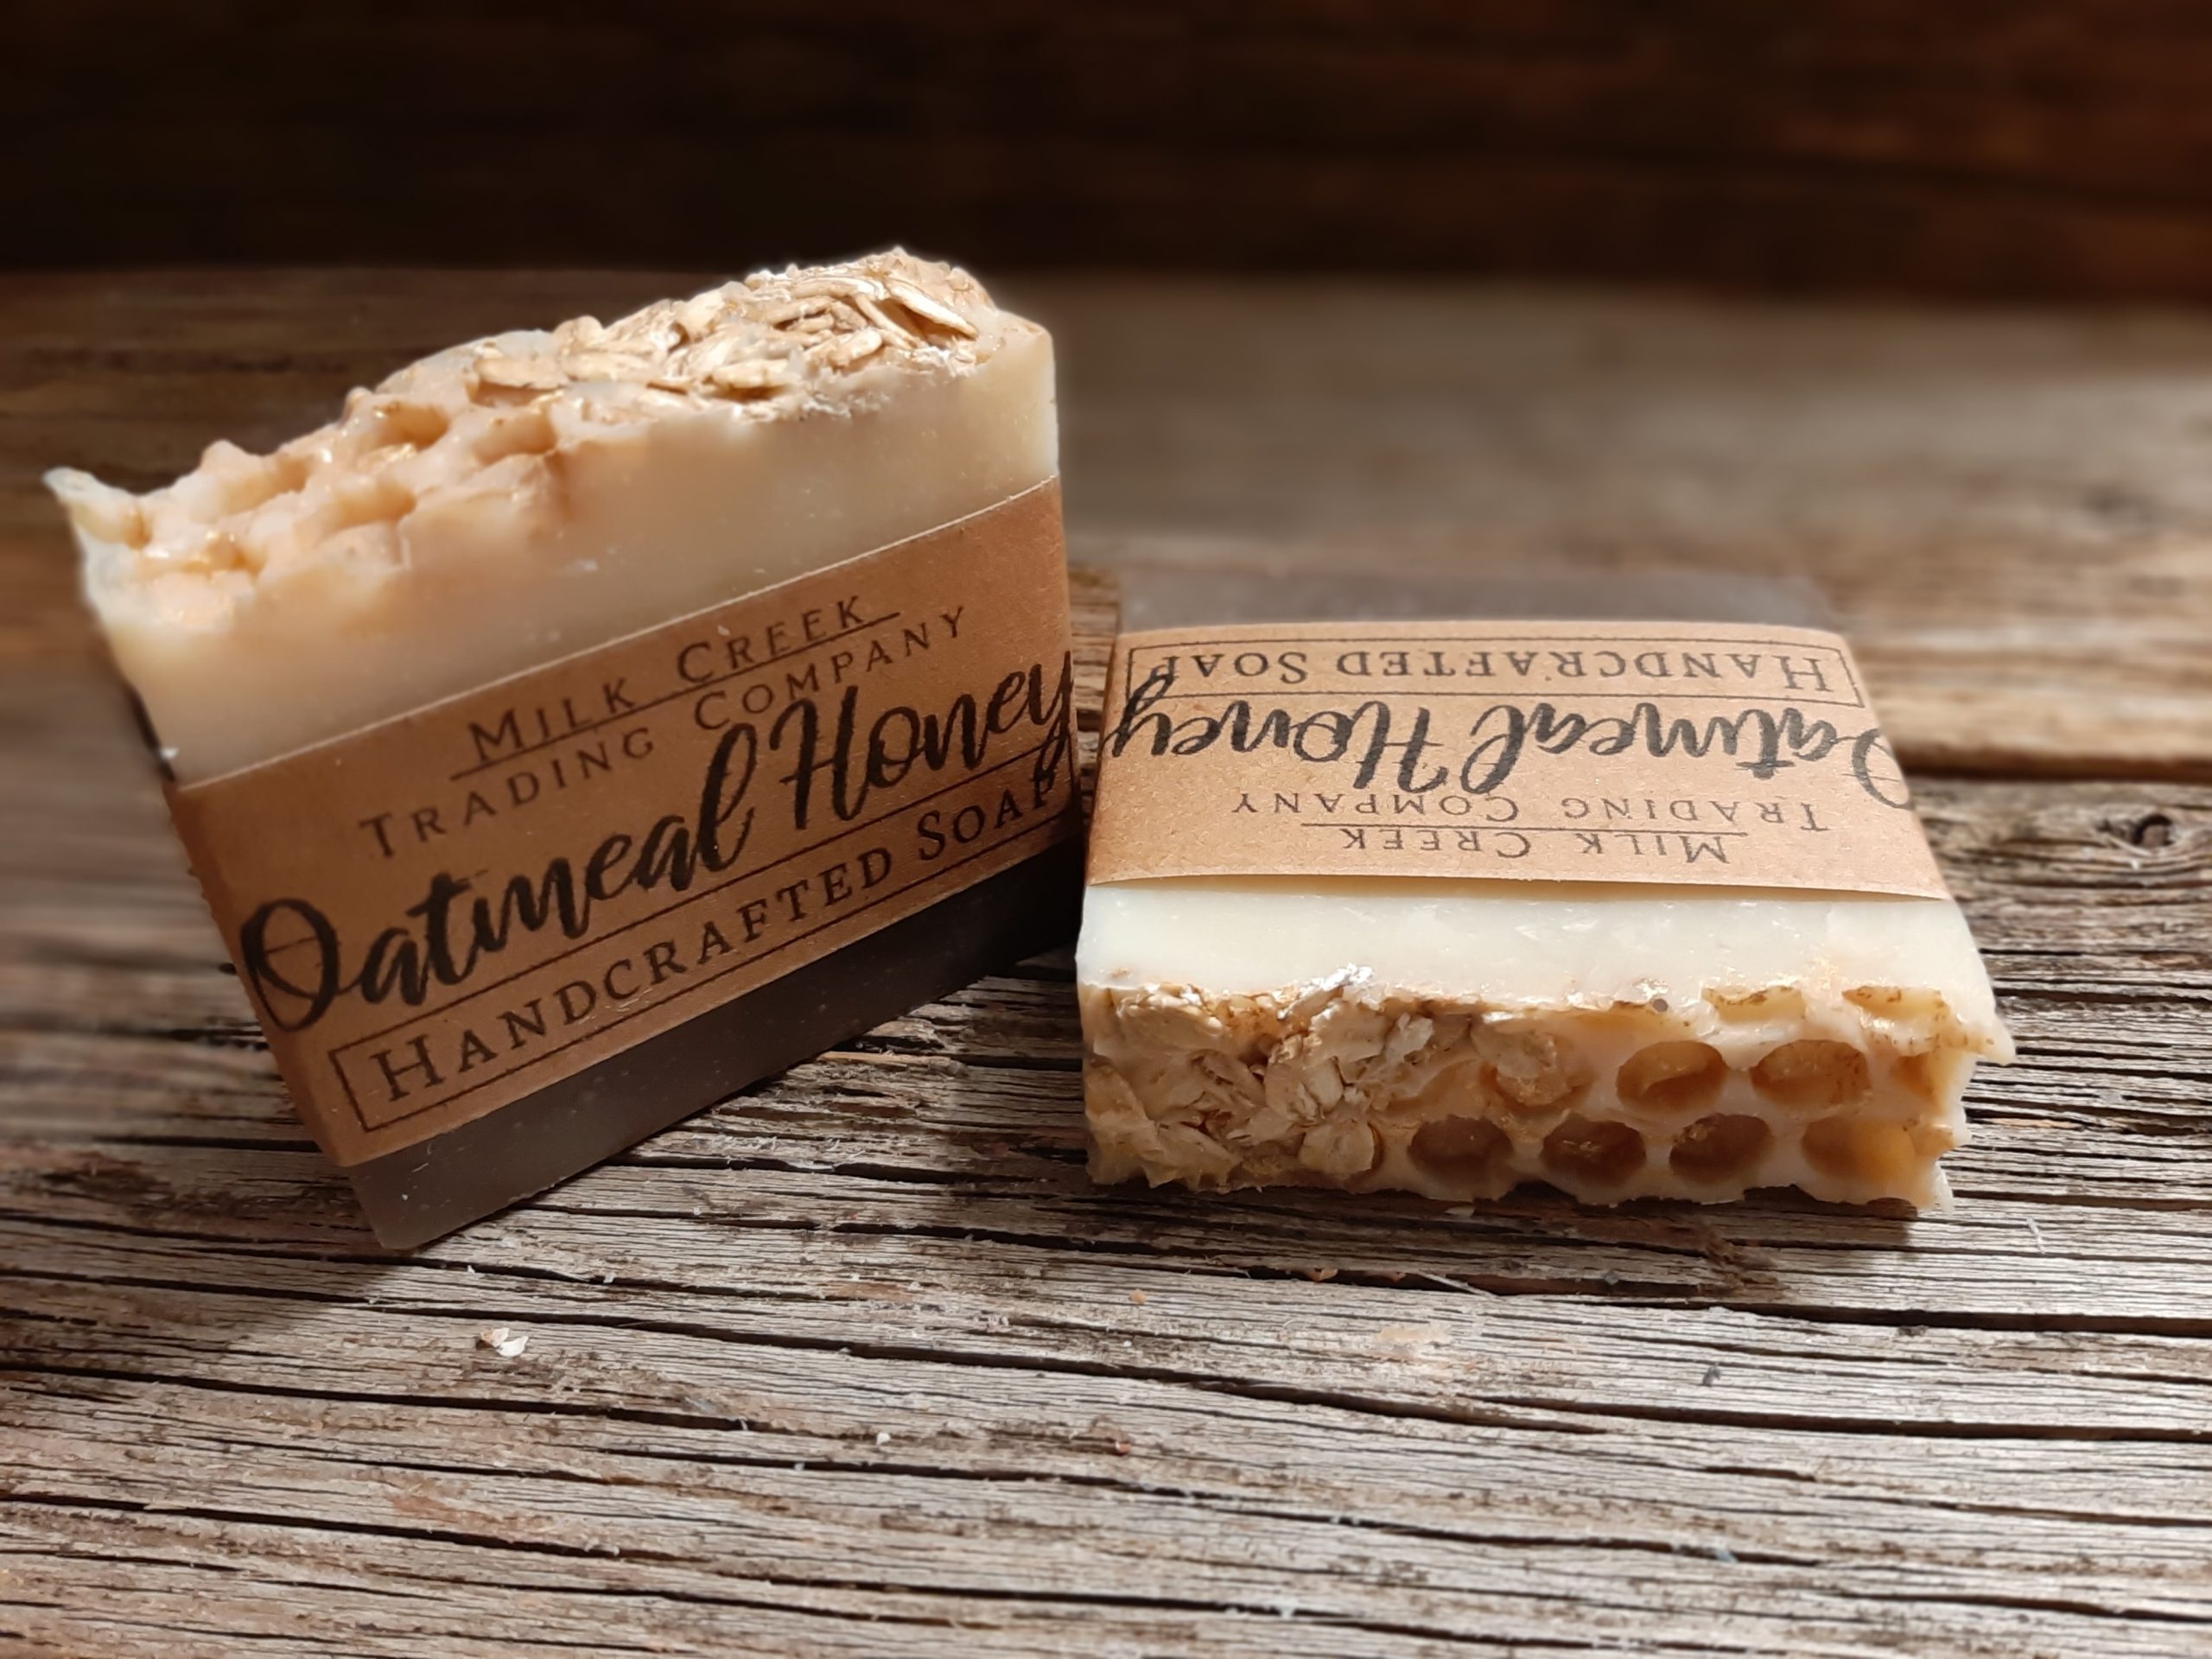 Organic Honey Oatmeal Soap – Handmade Naturals Inc